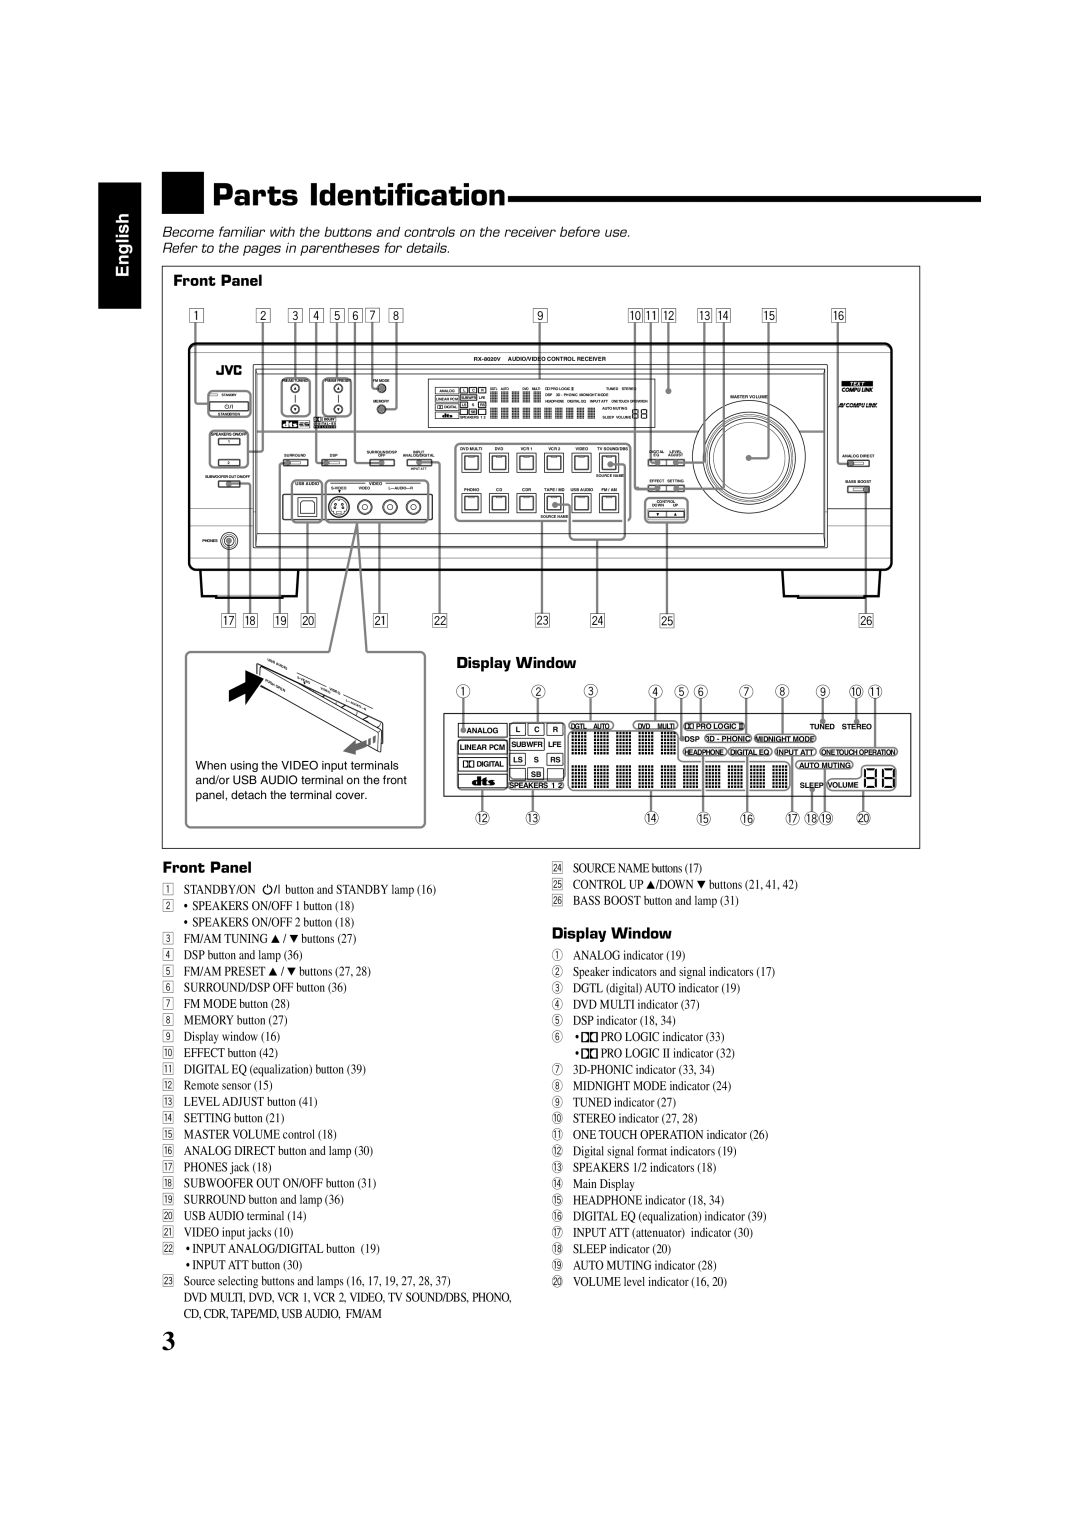 JVC RX-8020VBK manual Parts Identification, English, 2 3 4 5 67, pqw e r t, u i o, @ # $ % 